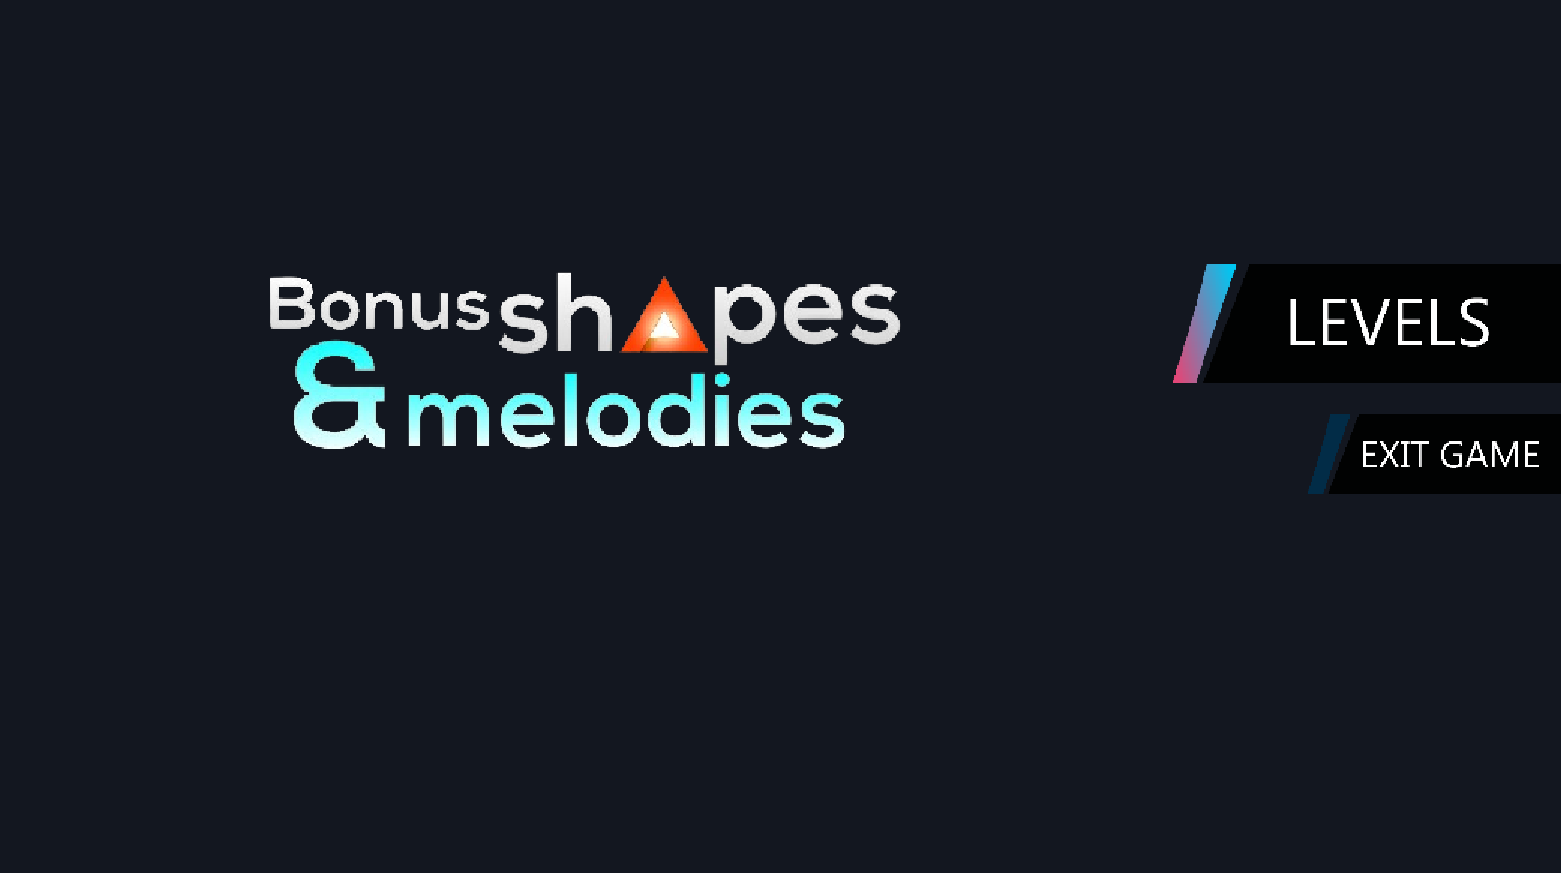 Bonus Shapes & Melodies